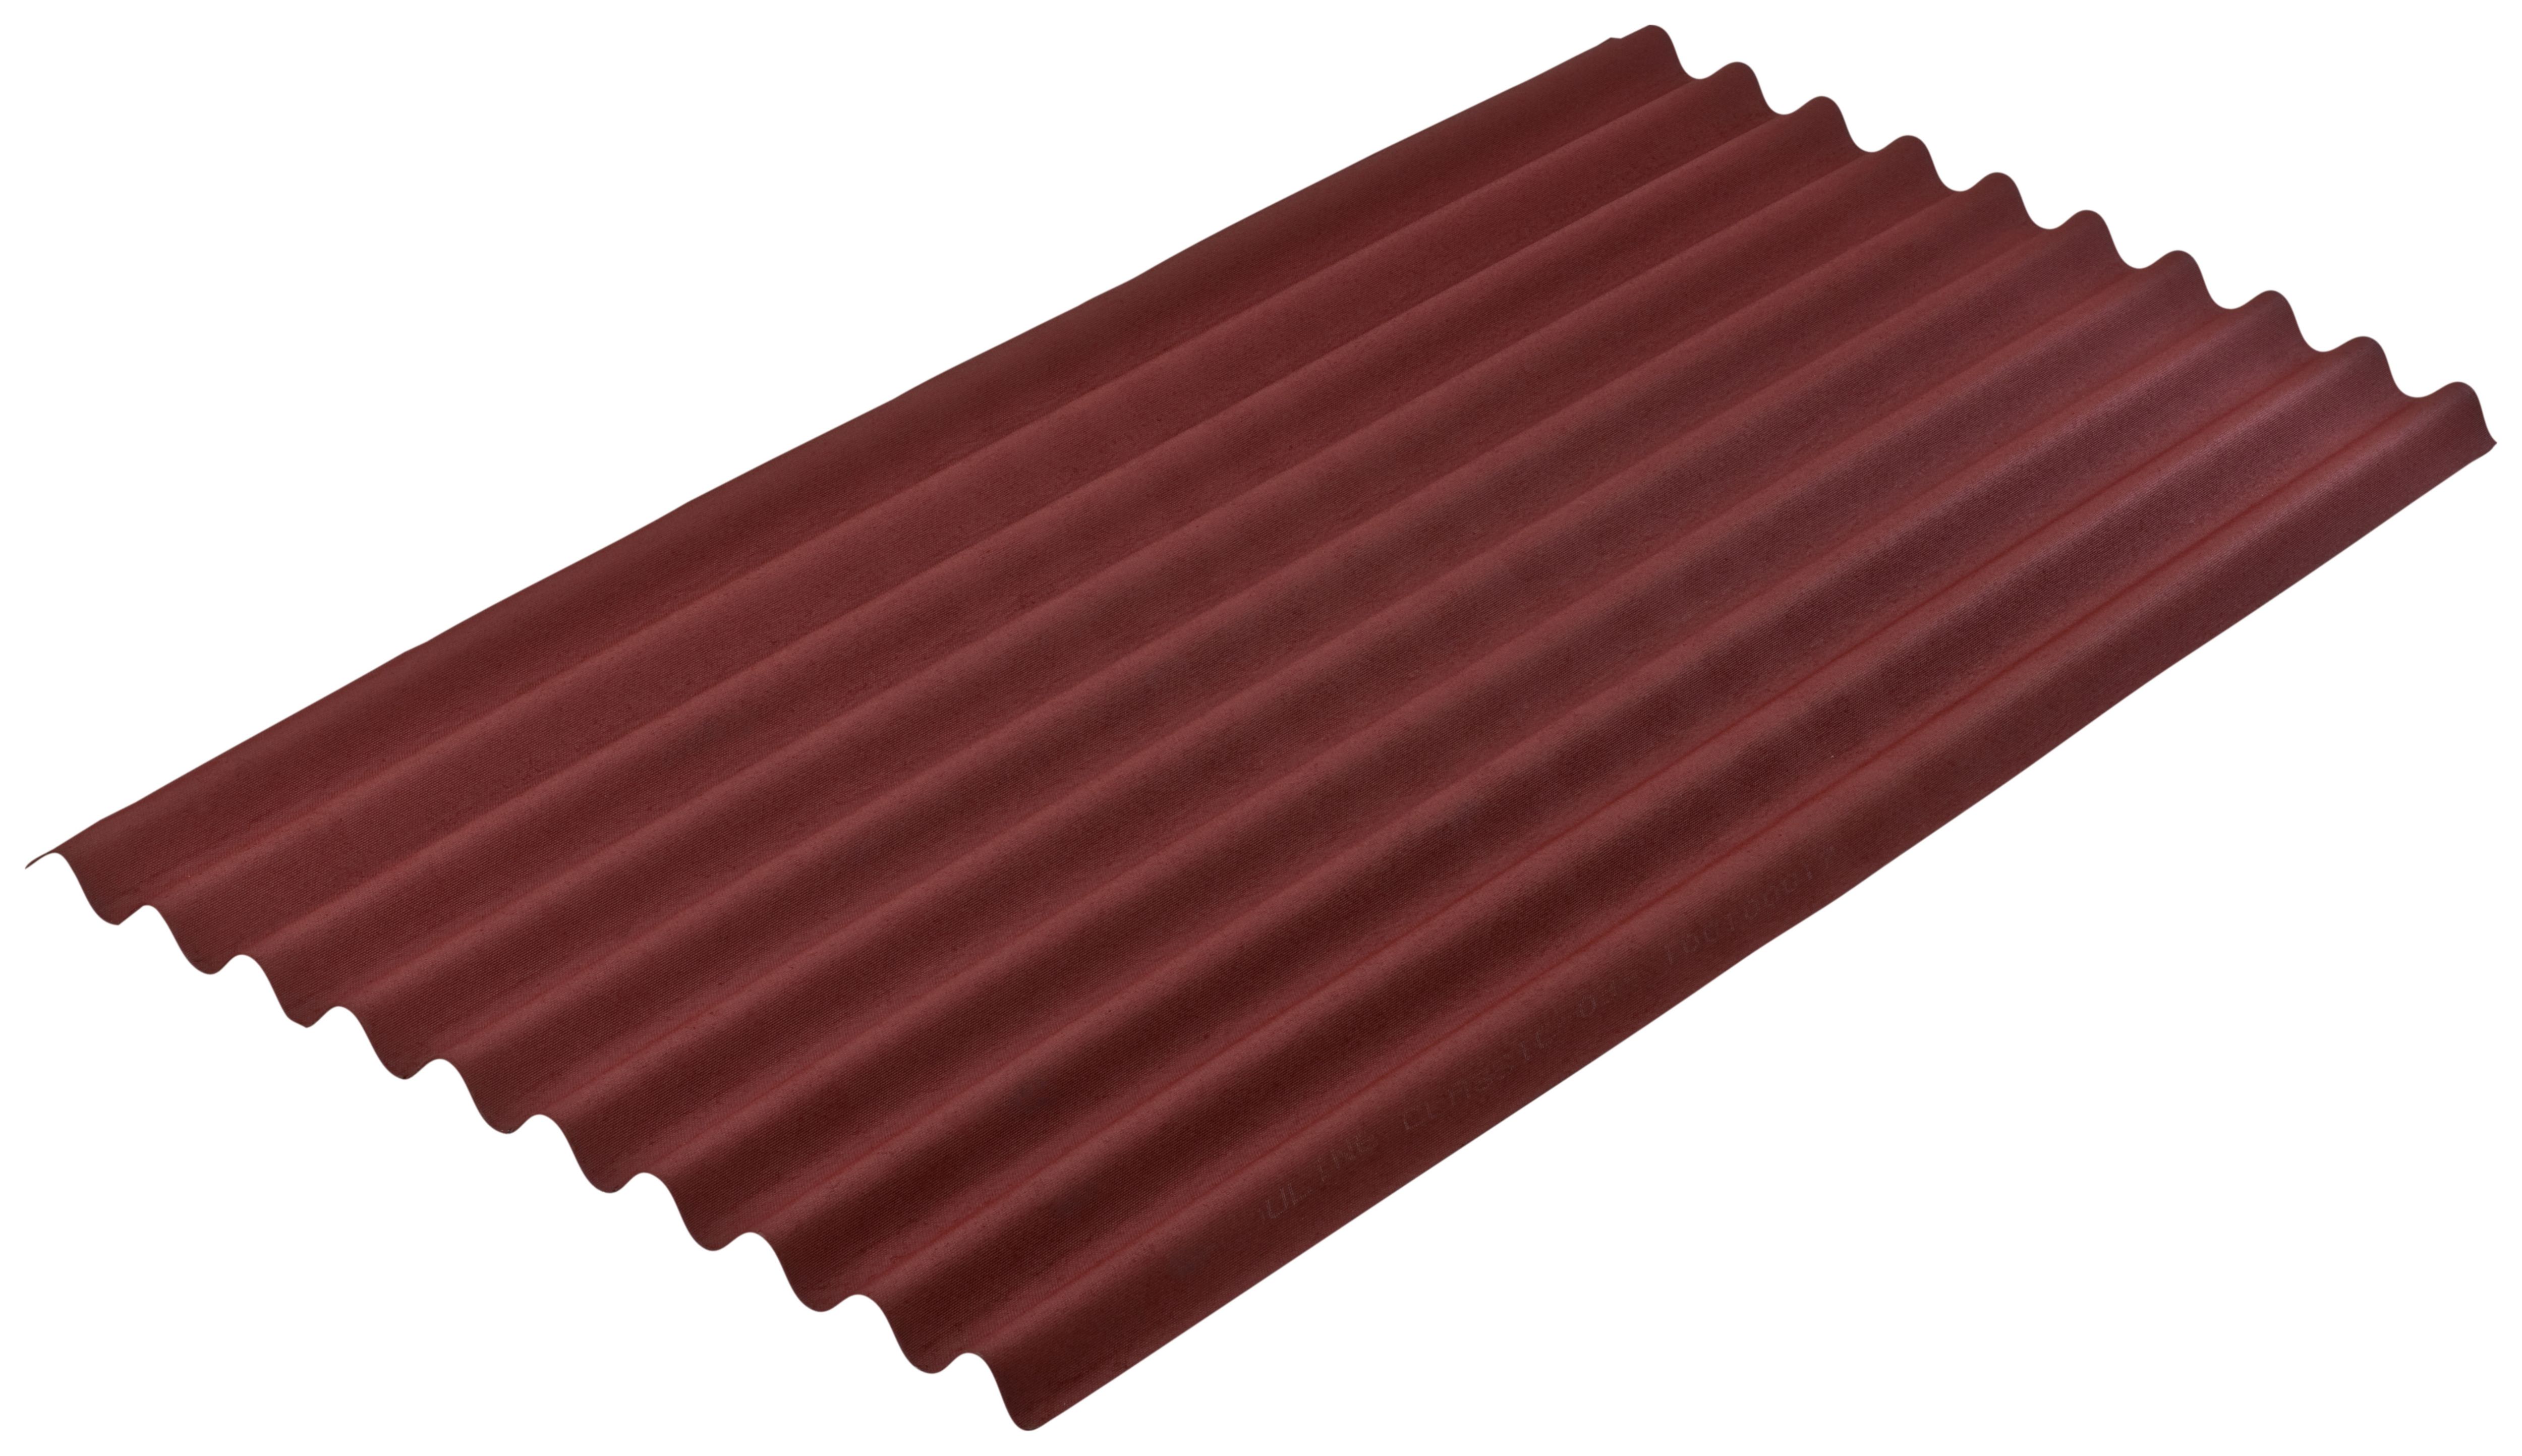 Onduline Classic Red Bitumen Corrugated Roof Sheet - 950 x 2000 x 3mm